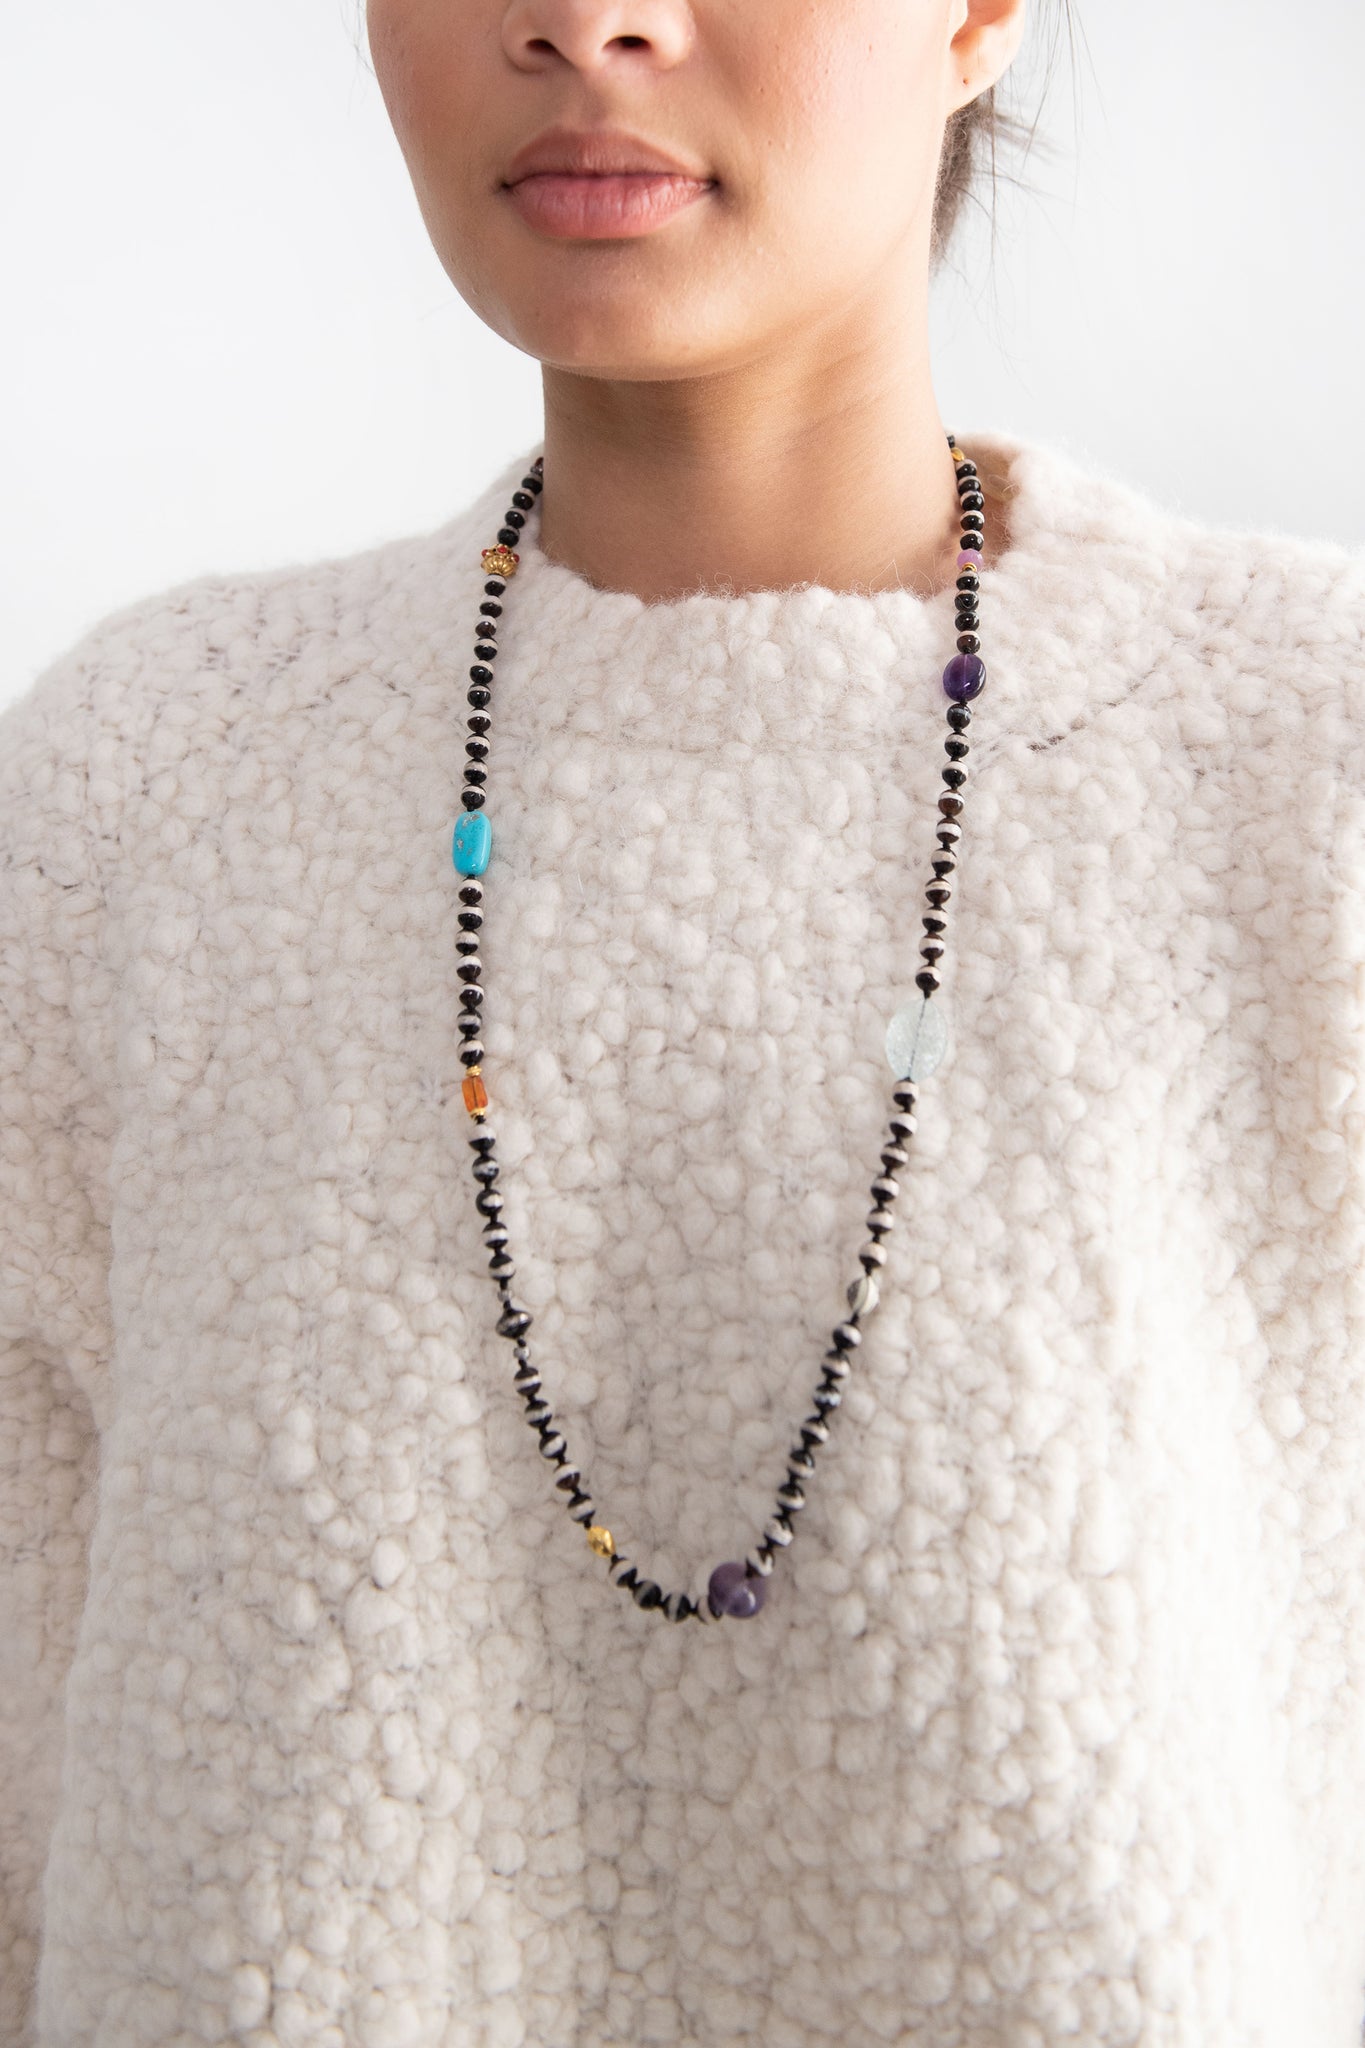 ILEANA MAKRI - Beaded Necklace, Black Agate